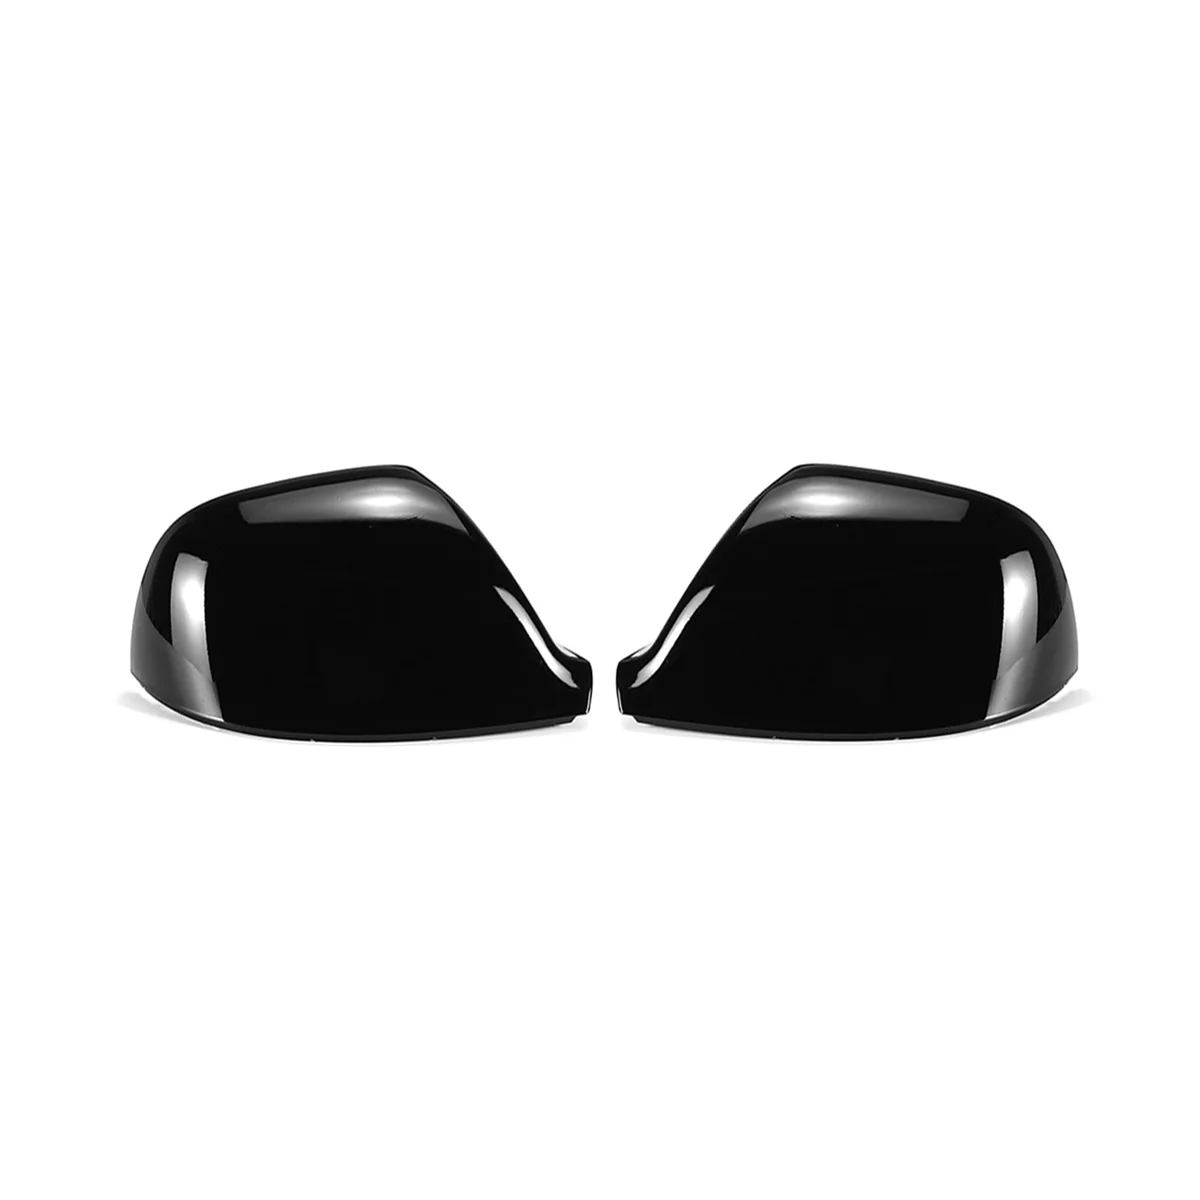 Автомобильная Яркая Черная Боковая крышка зеркала заднего вида, Прямая крышка зеркала для VW Transporter T5 T5.1 2010-2015 T6 2016-2019